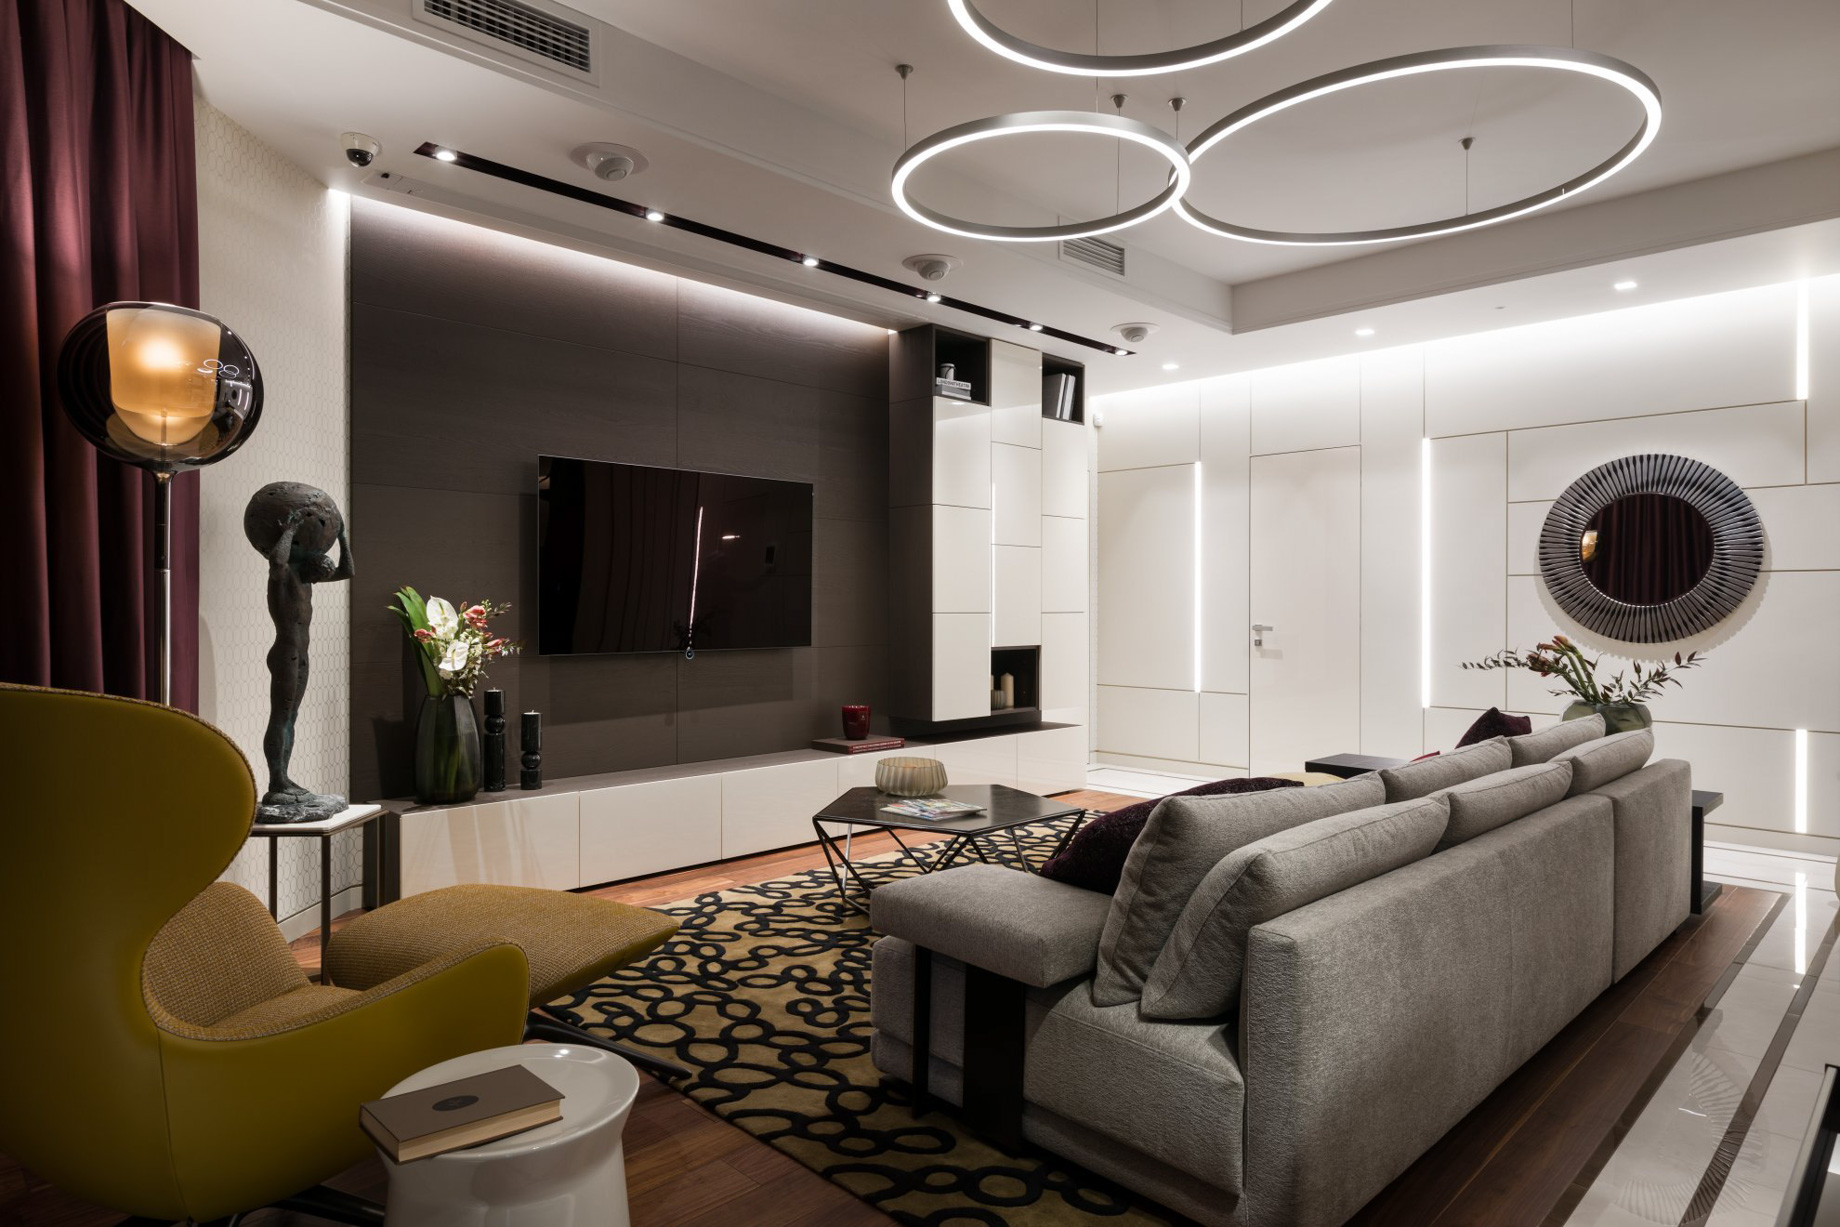 Pecher SKY Apartment Interior Design Kiev, Ukraine – Nataly Bolshakova